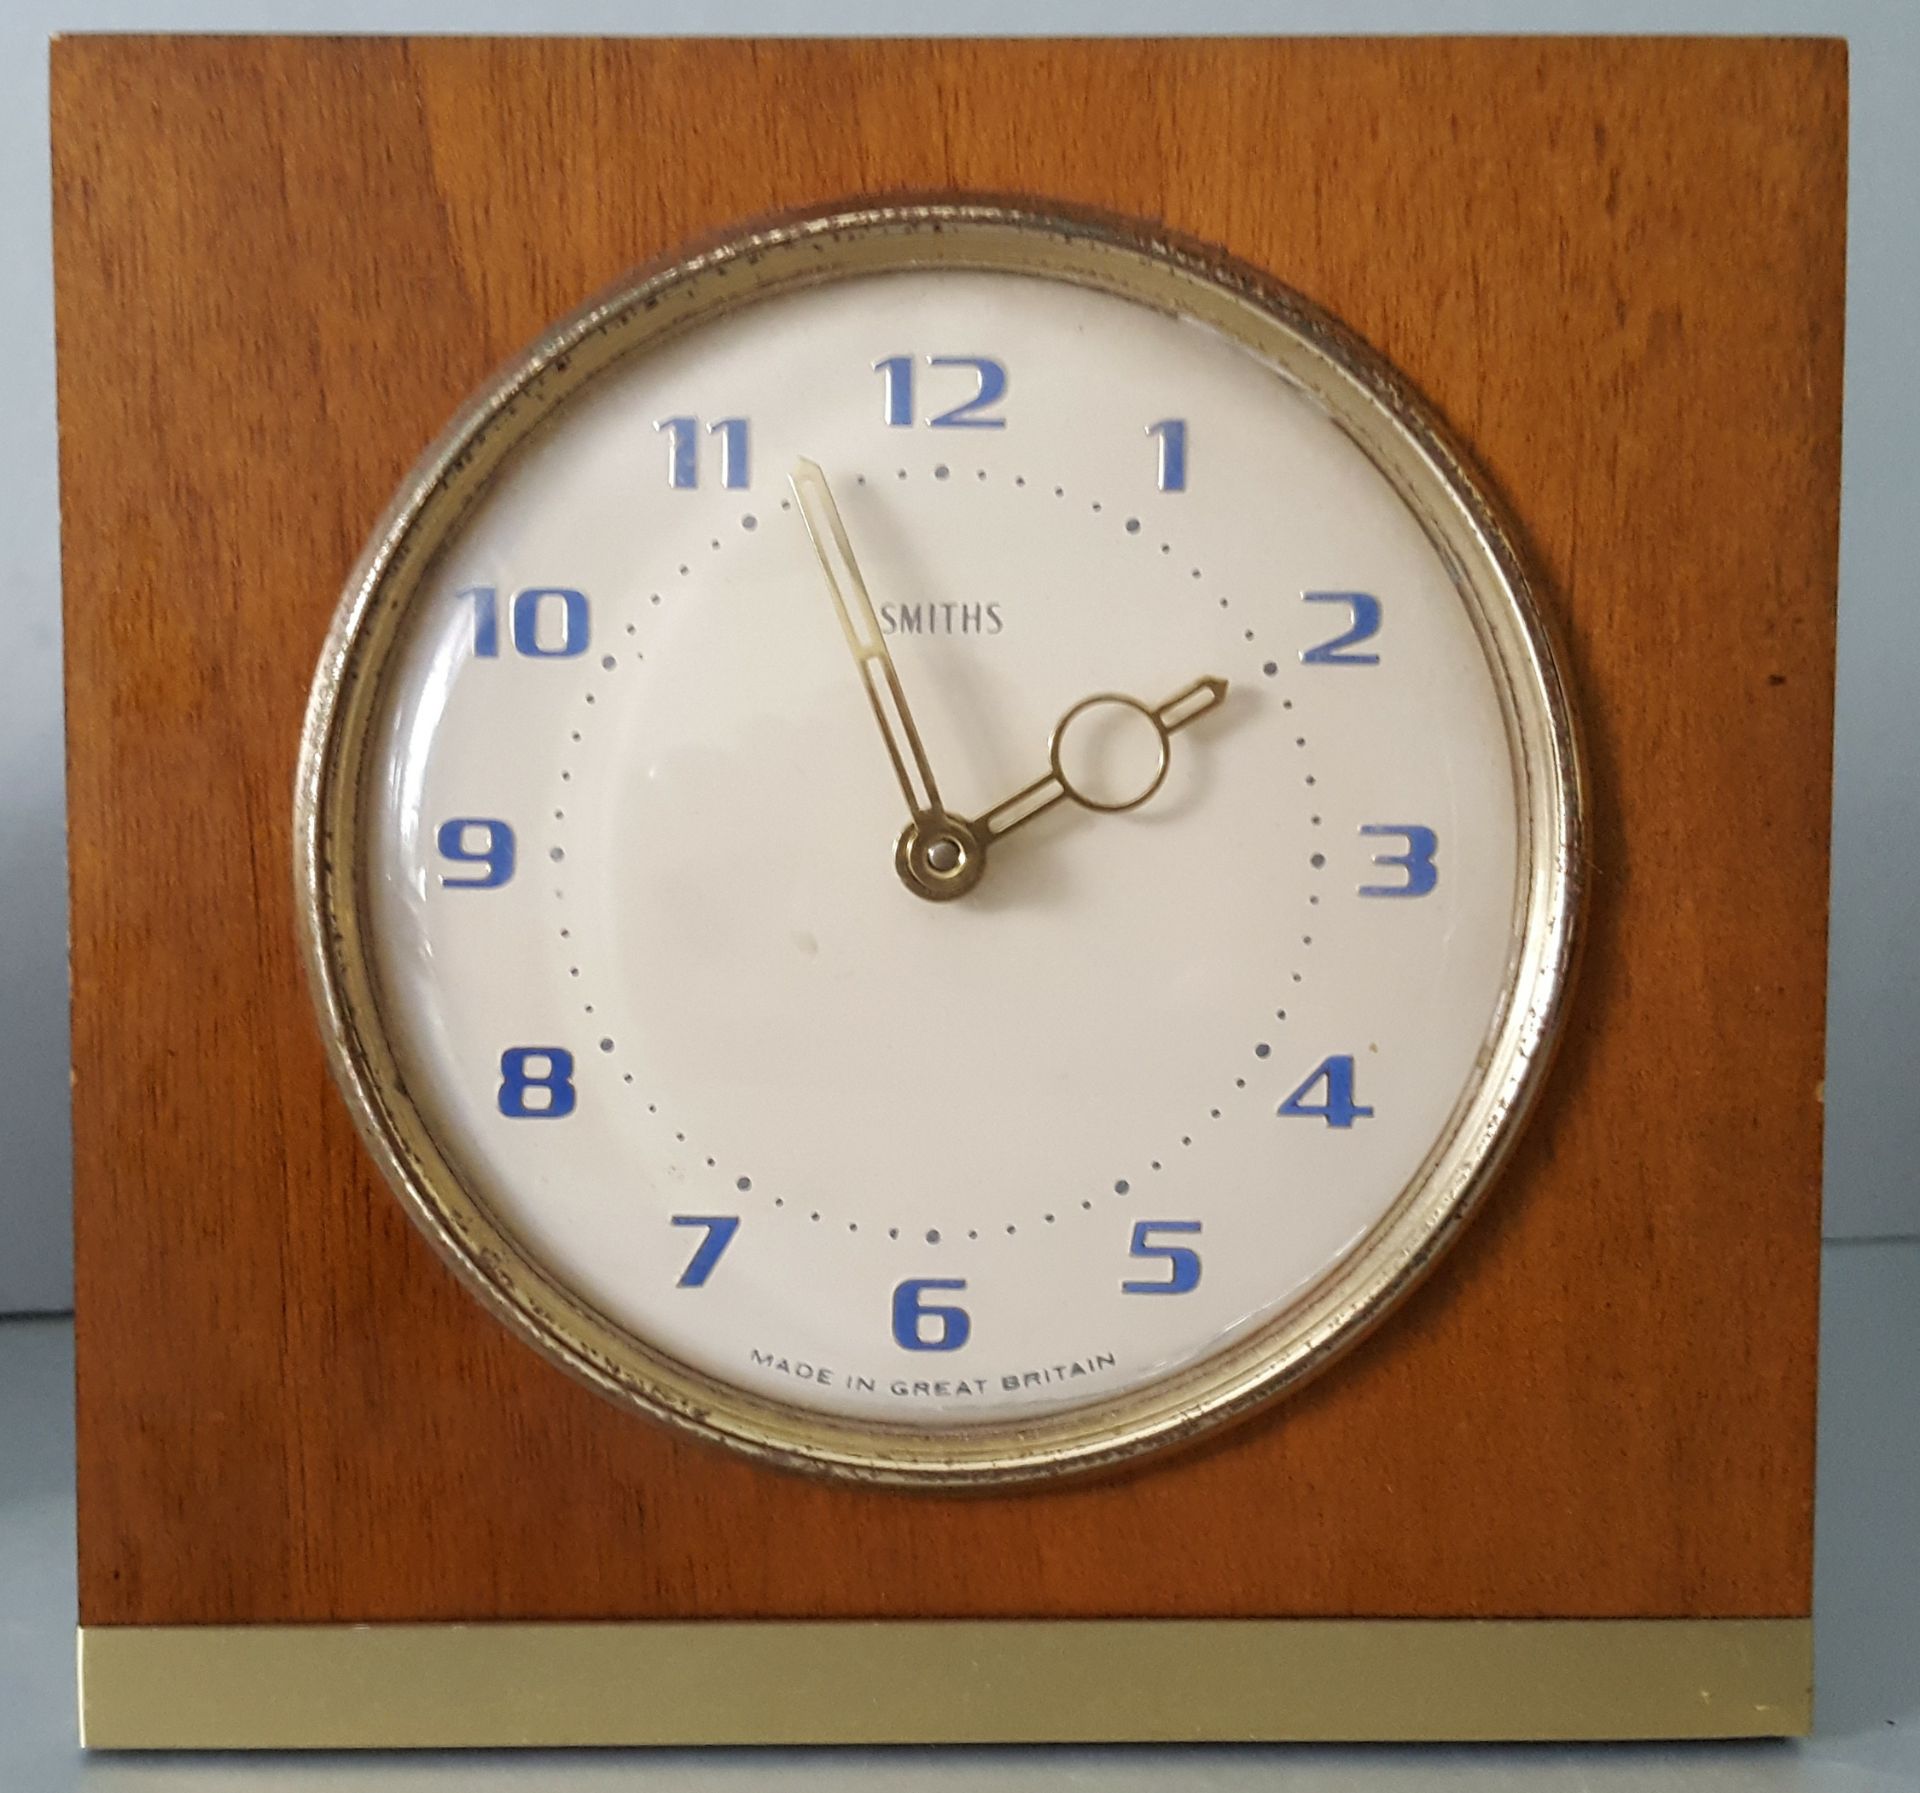 Vintage Retro Metamec Mantle Clock & Smiths Mantle Clock - Image 3 of 3